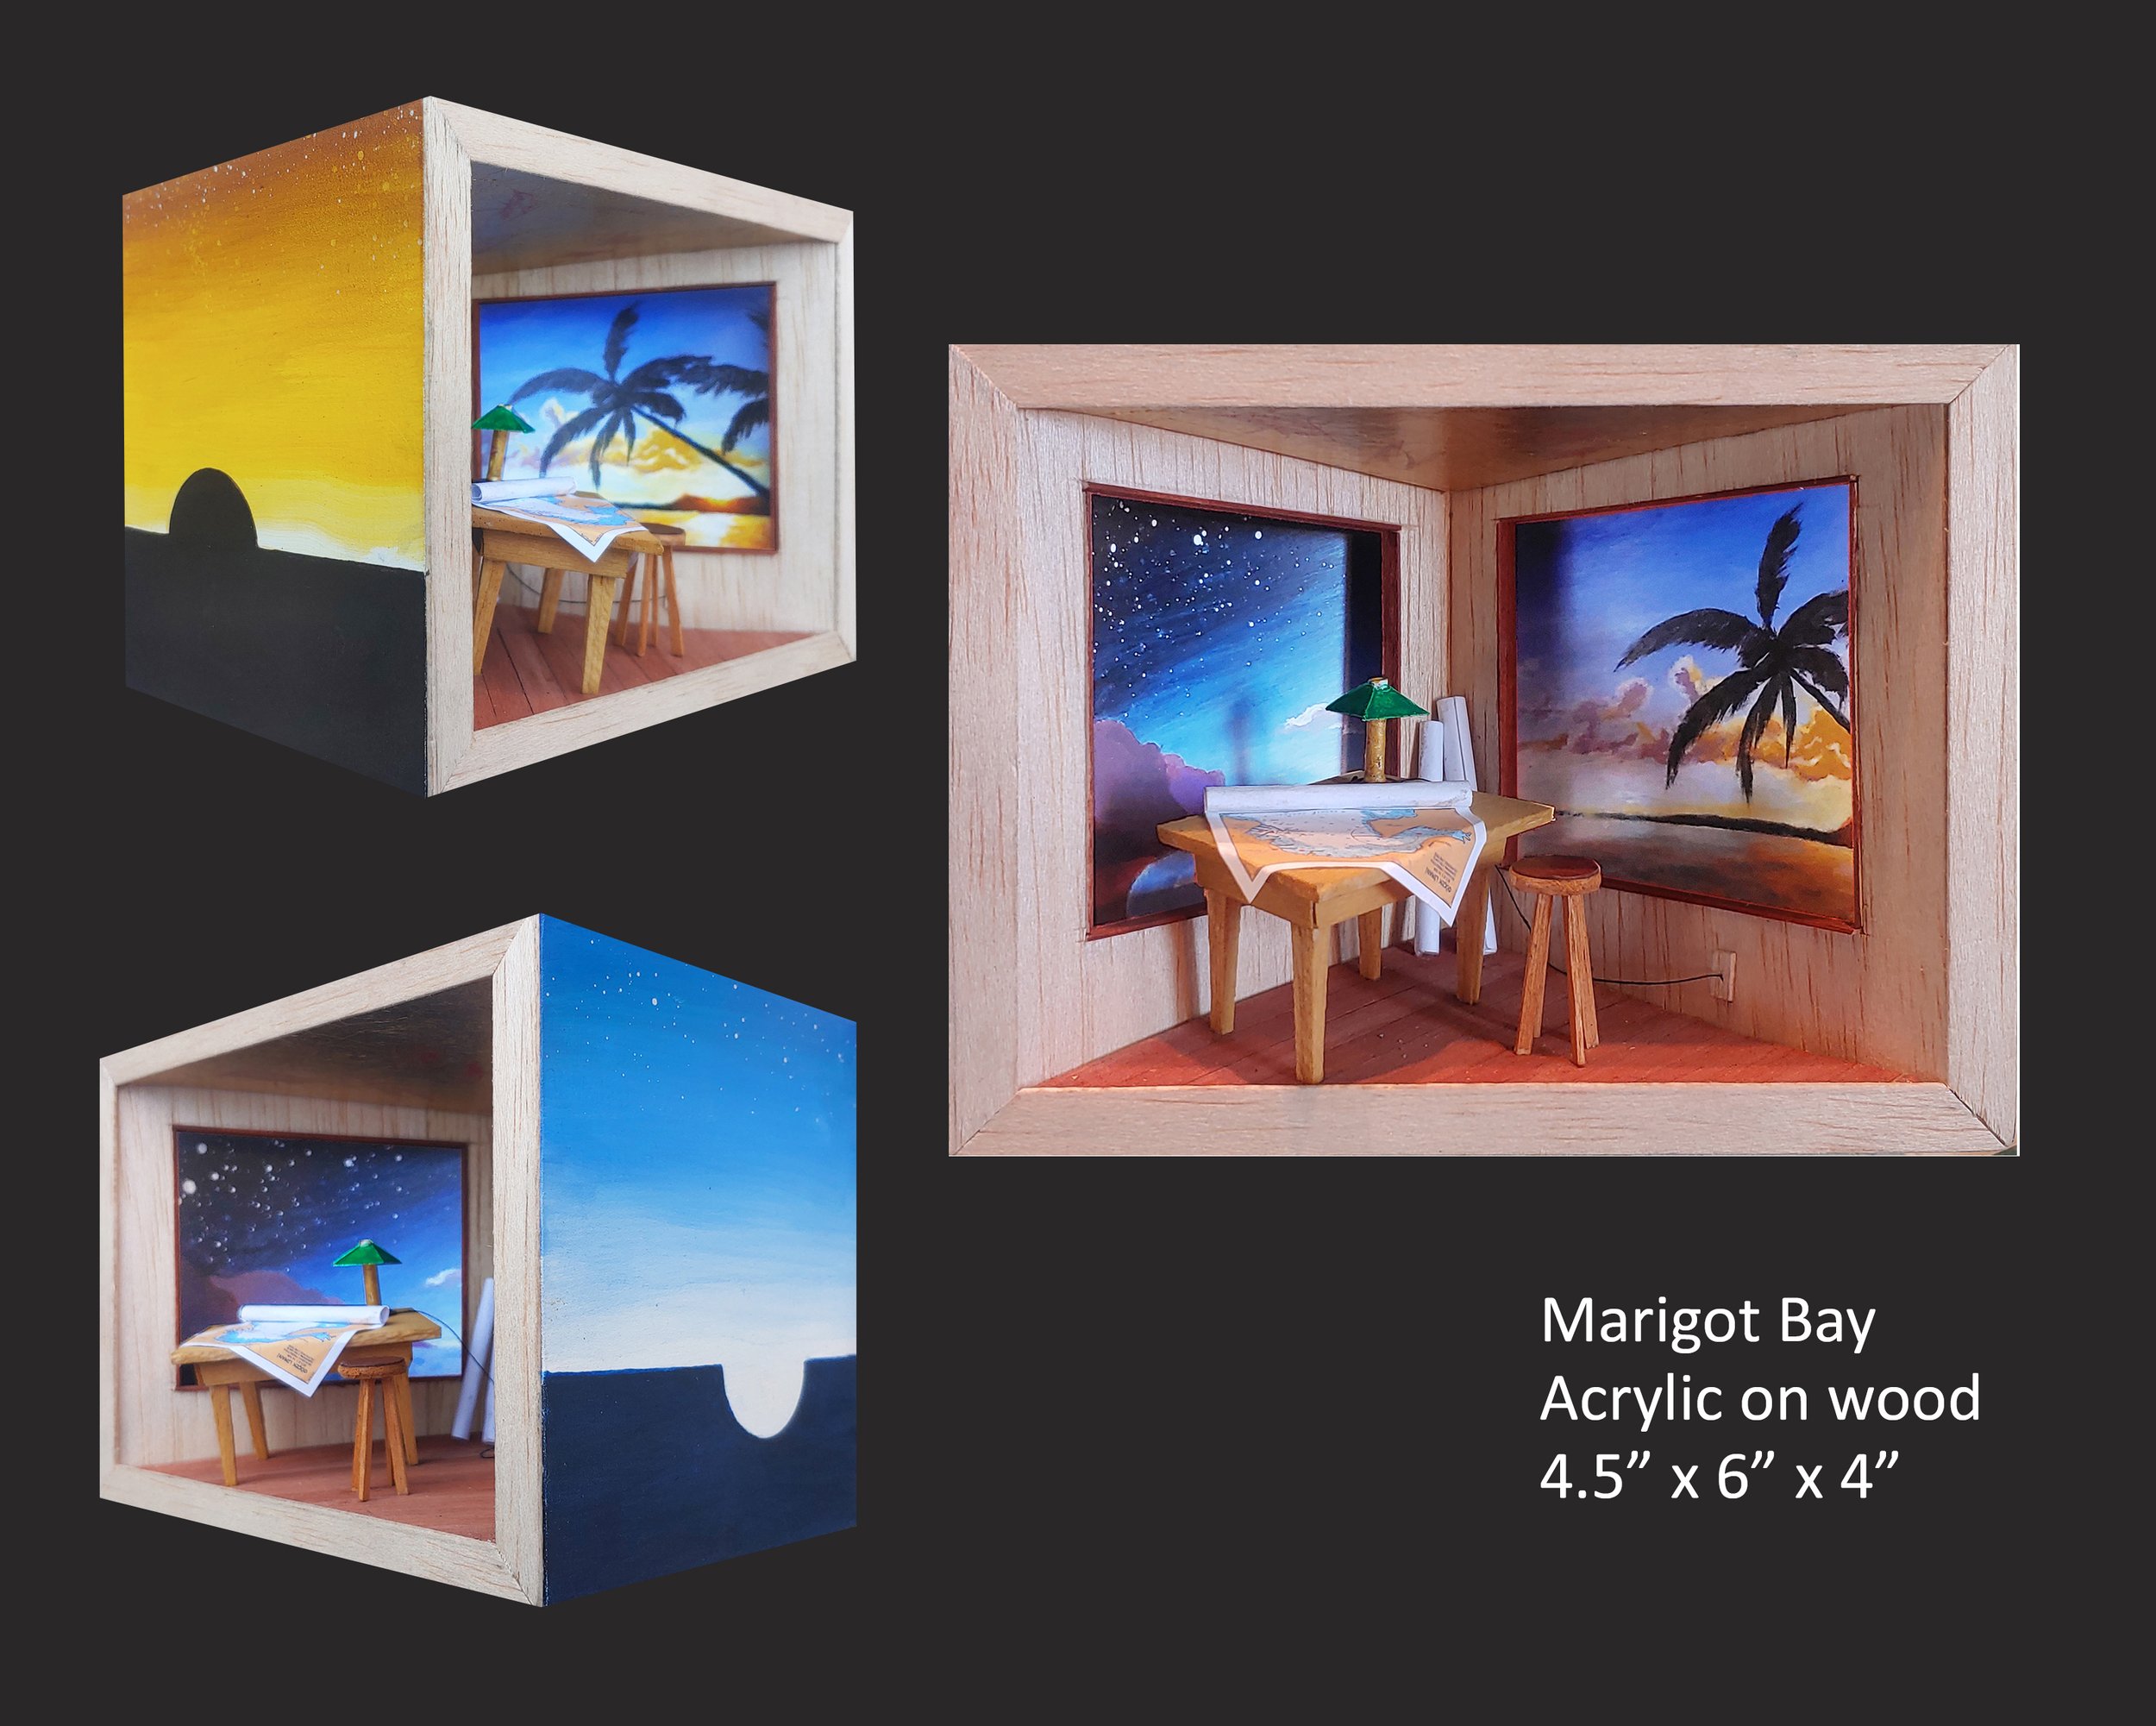 Marigot Bay acrylic on wood 4.5 x 6 x 4.jpg